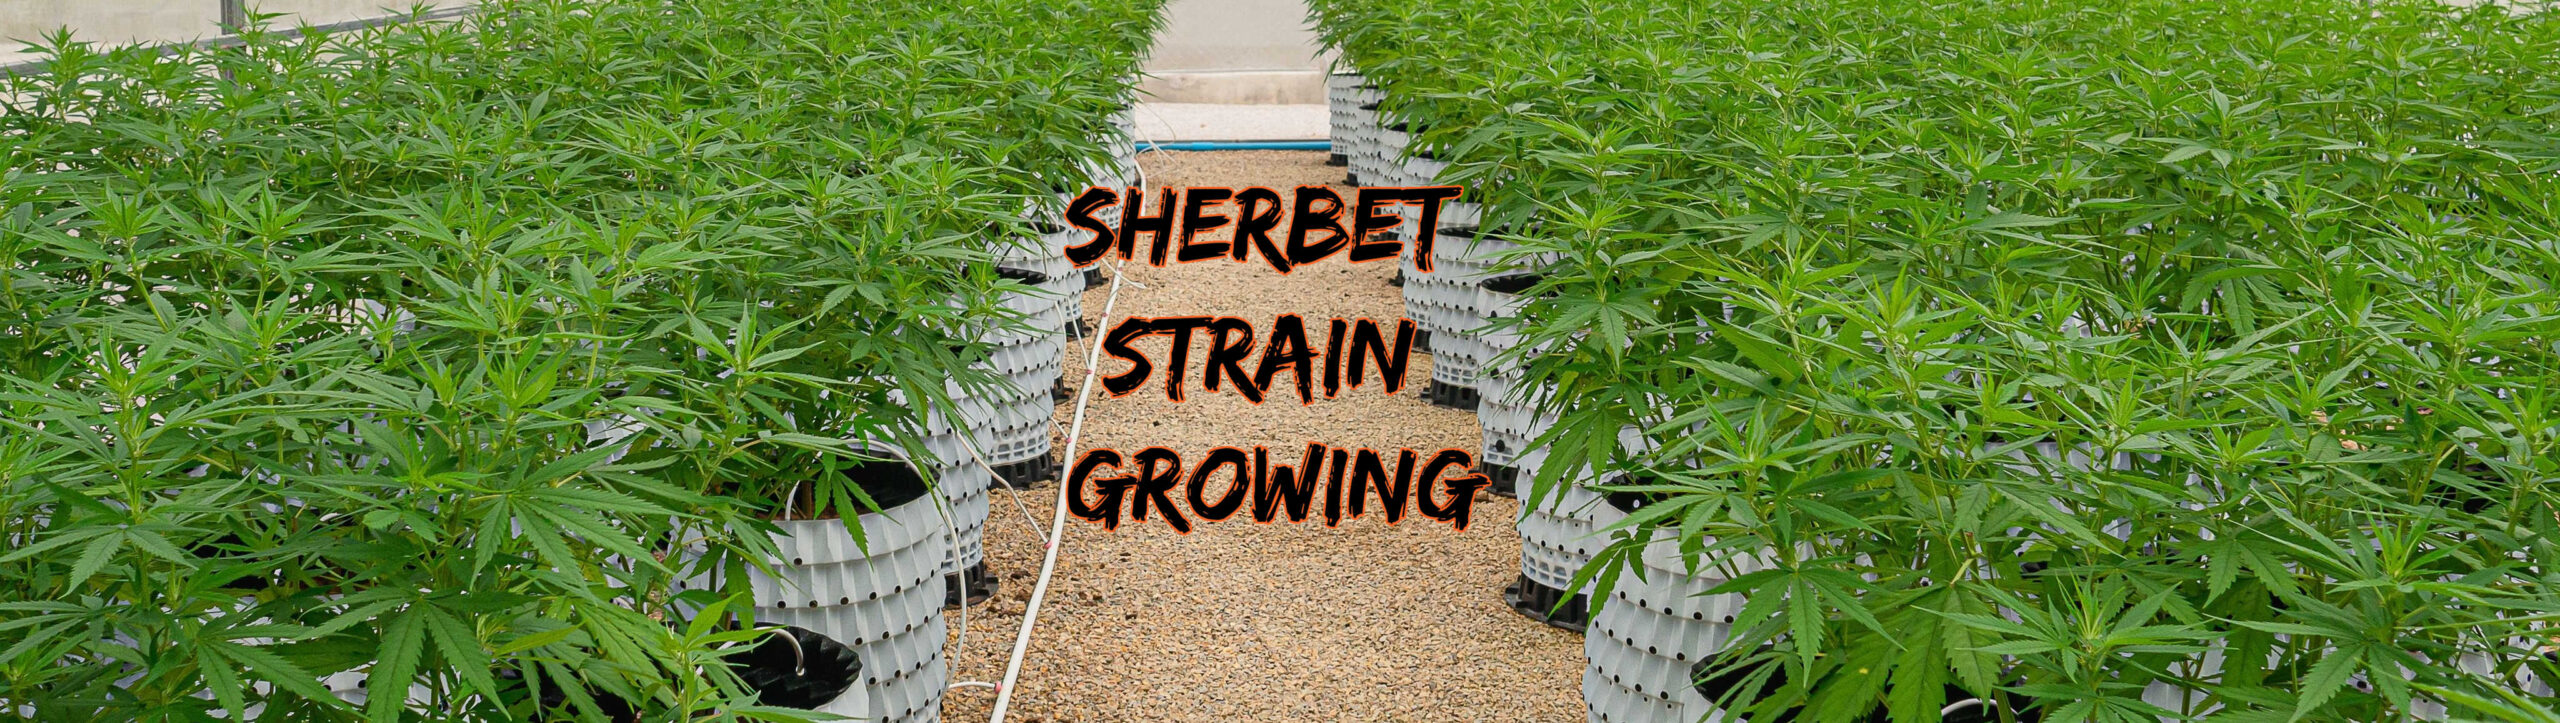 image of sherbet strain growing